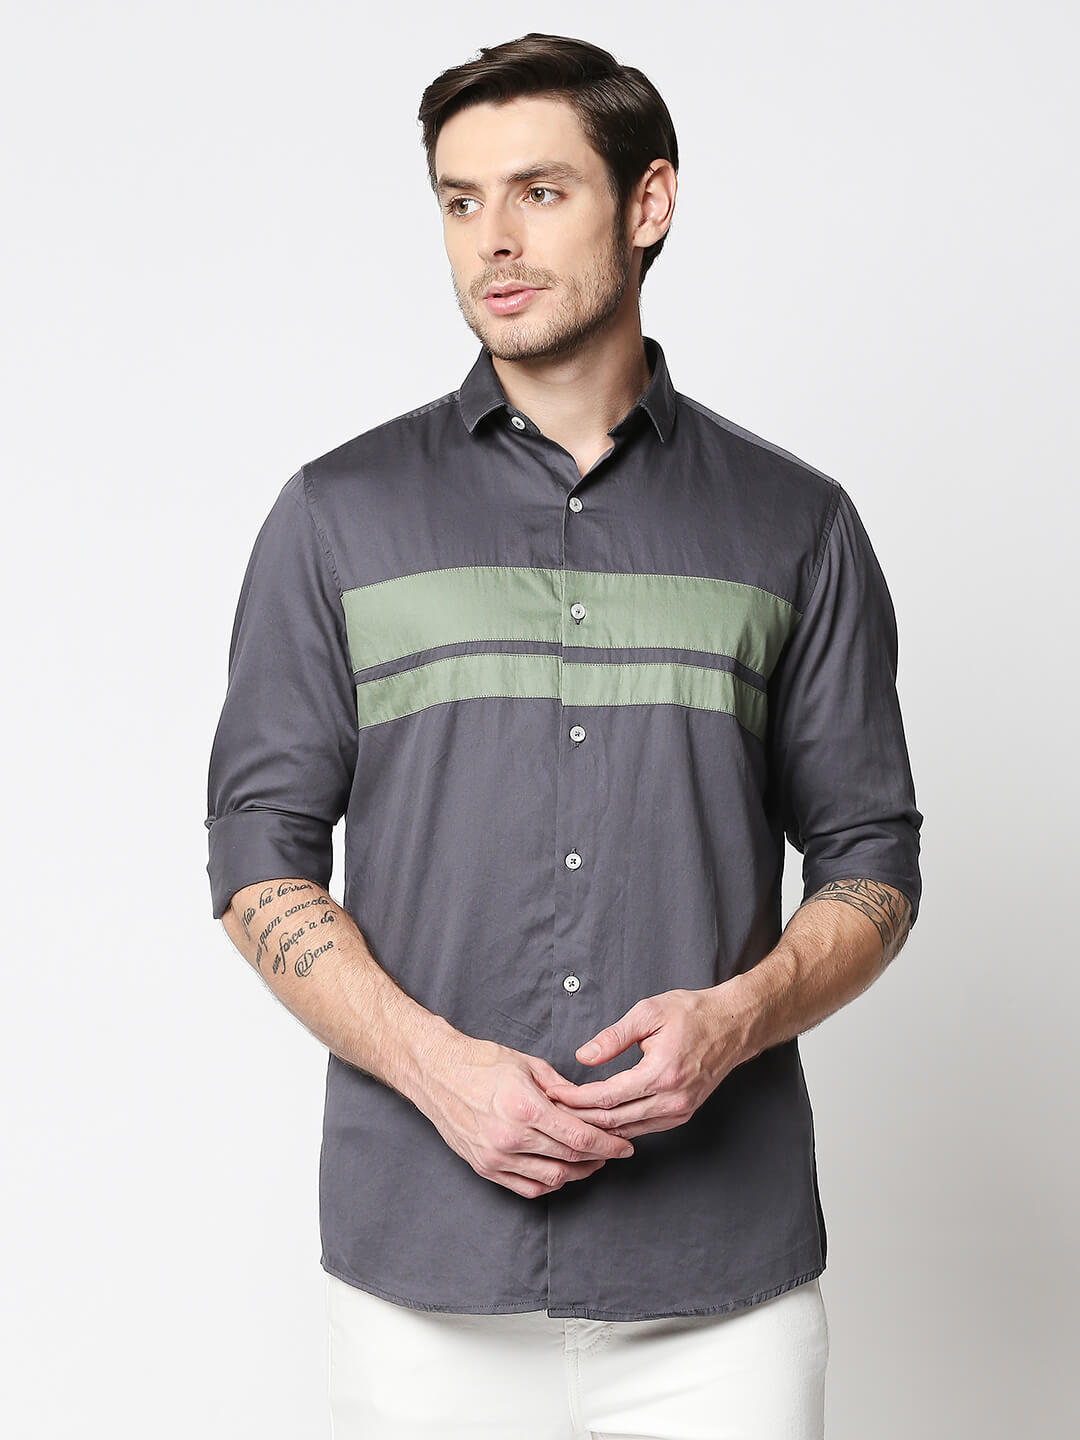 The Manaca Men Partywear Shirt- Grey & Sea-green Stripe